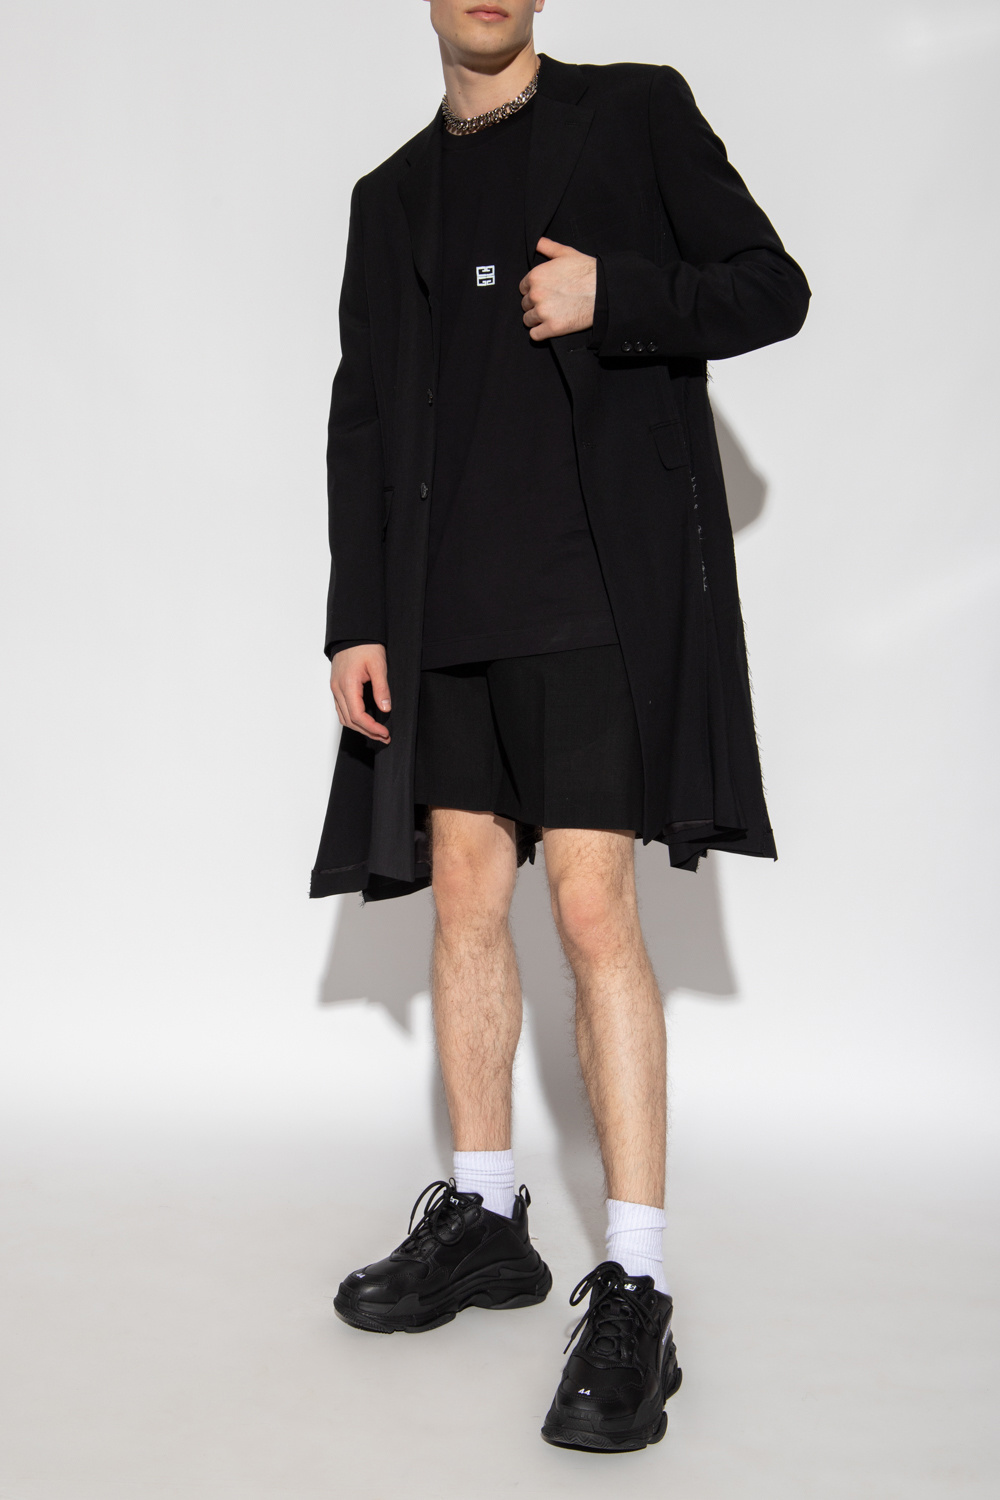 Givenchy Givenchy x Josh Smith, IetpShops, Men's Clothing